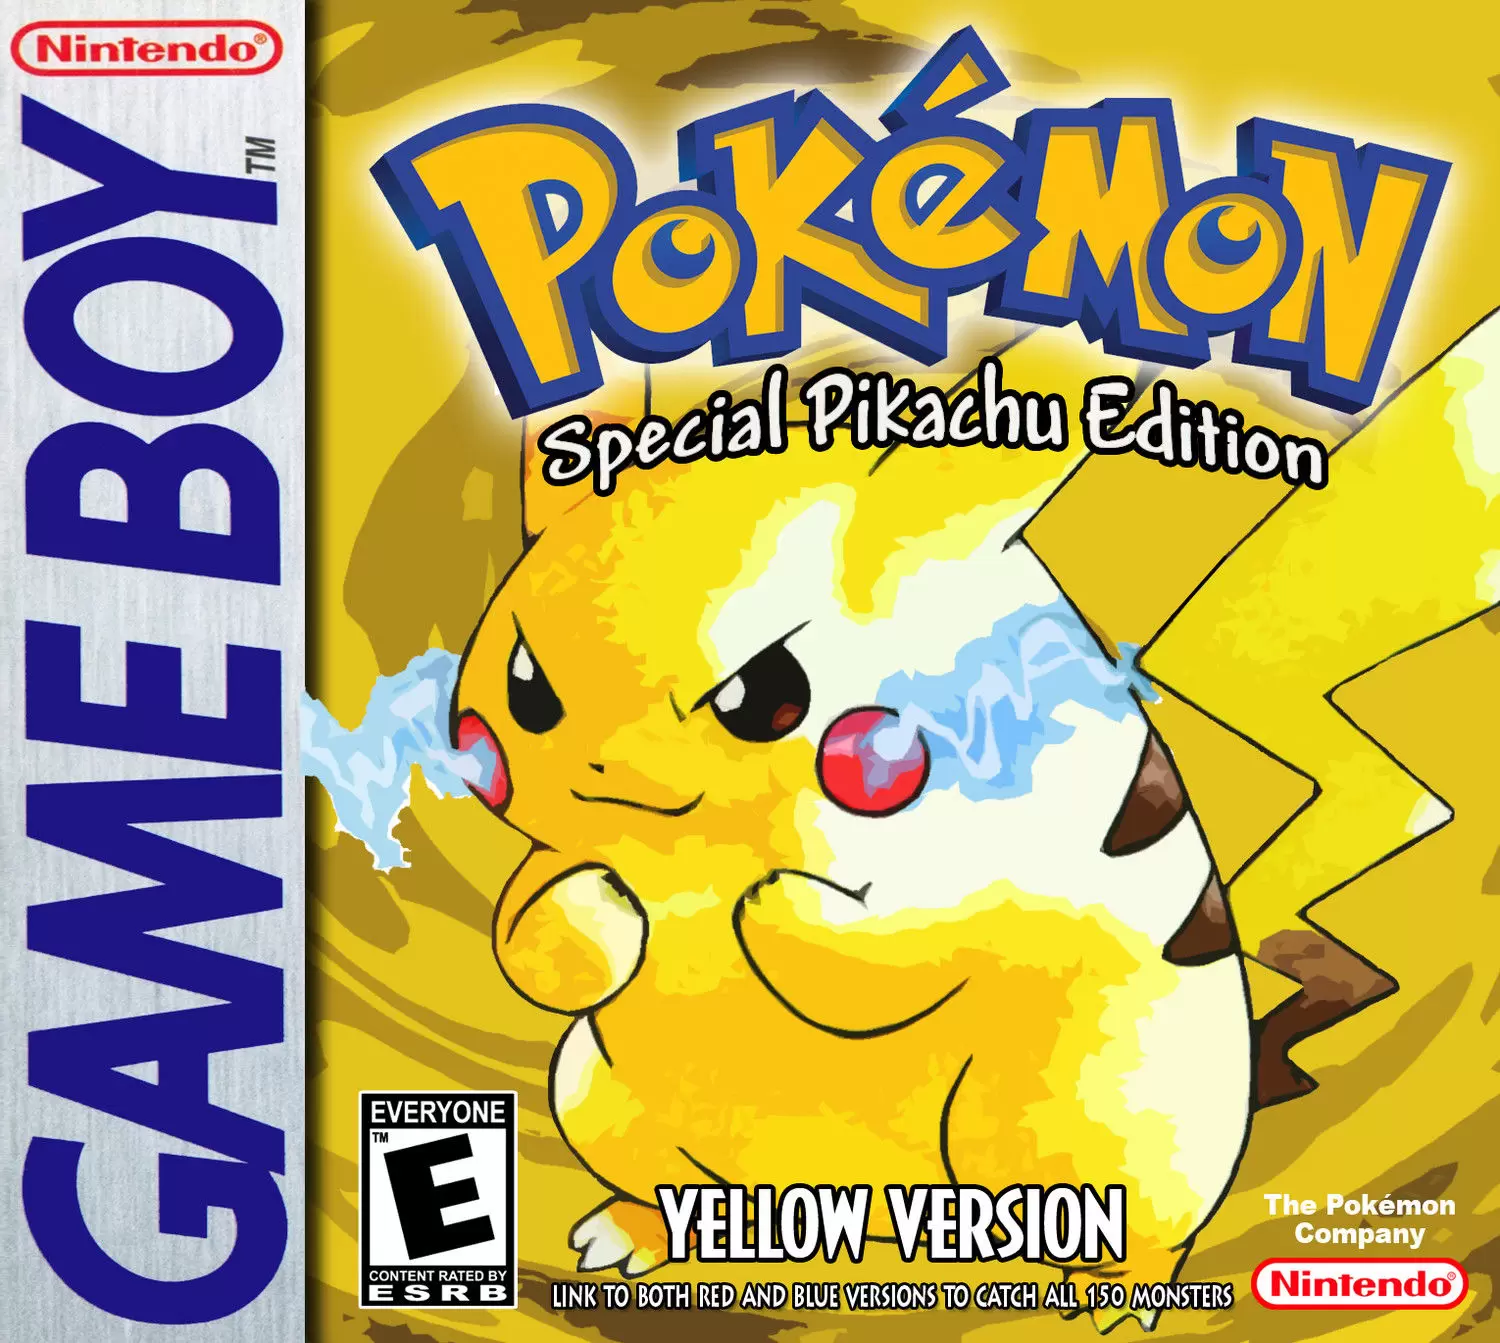 Game Boy Games - Pokémon Yellow Version: Special Pikachu Edition